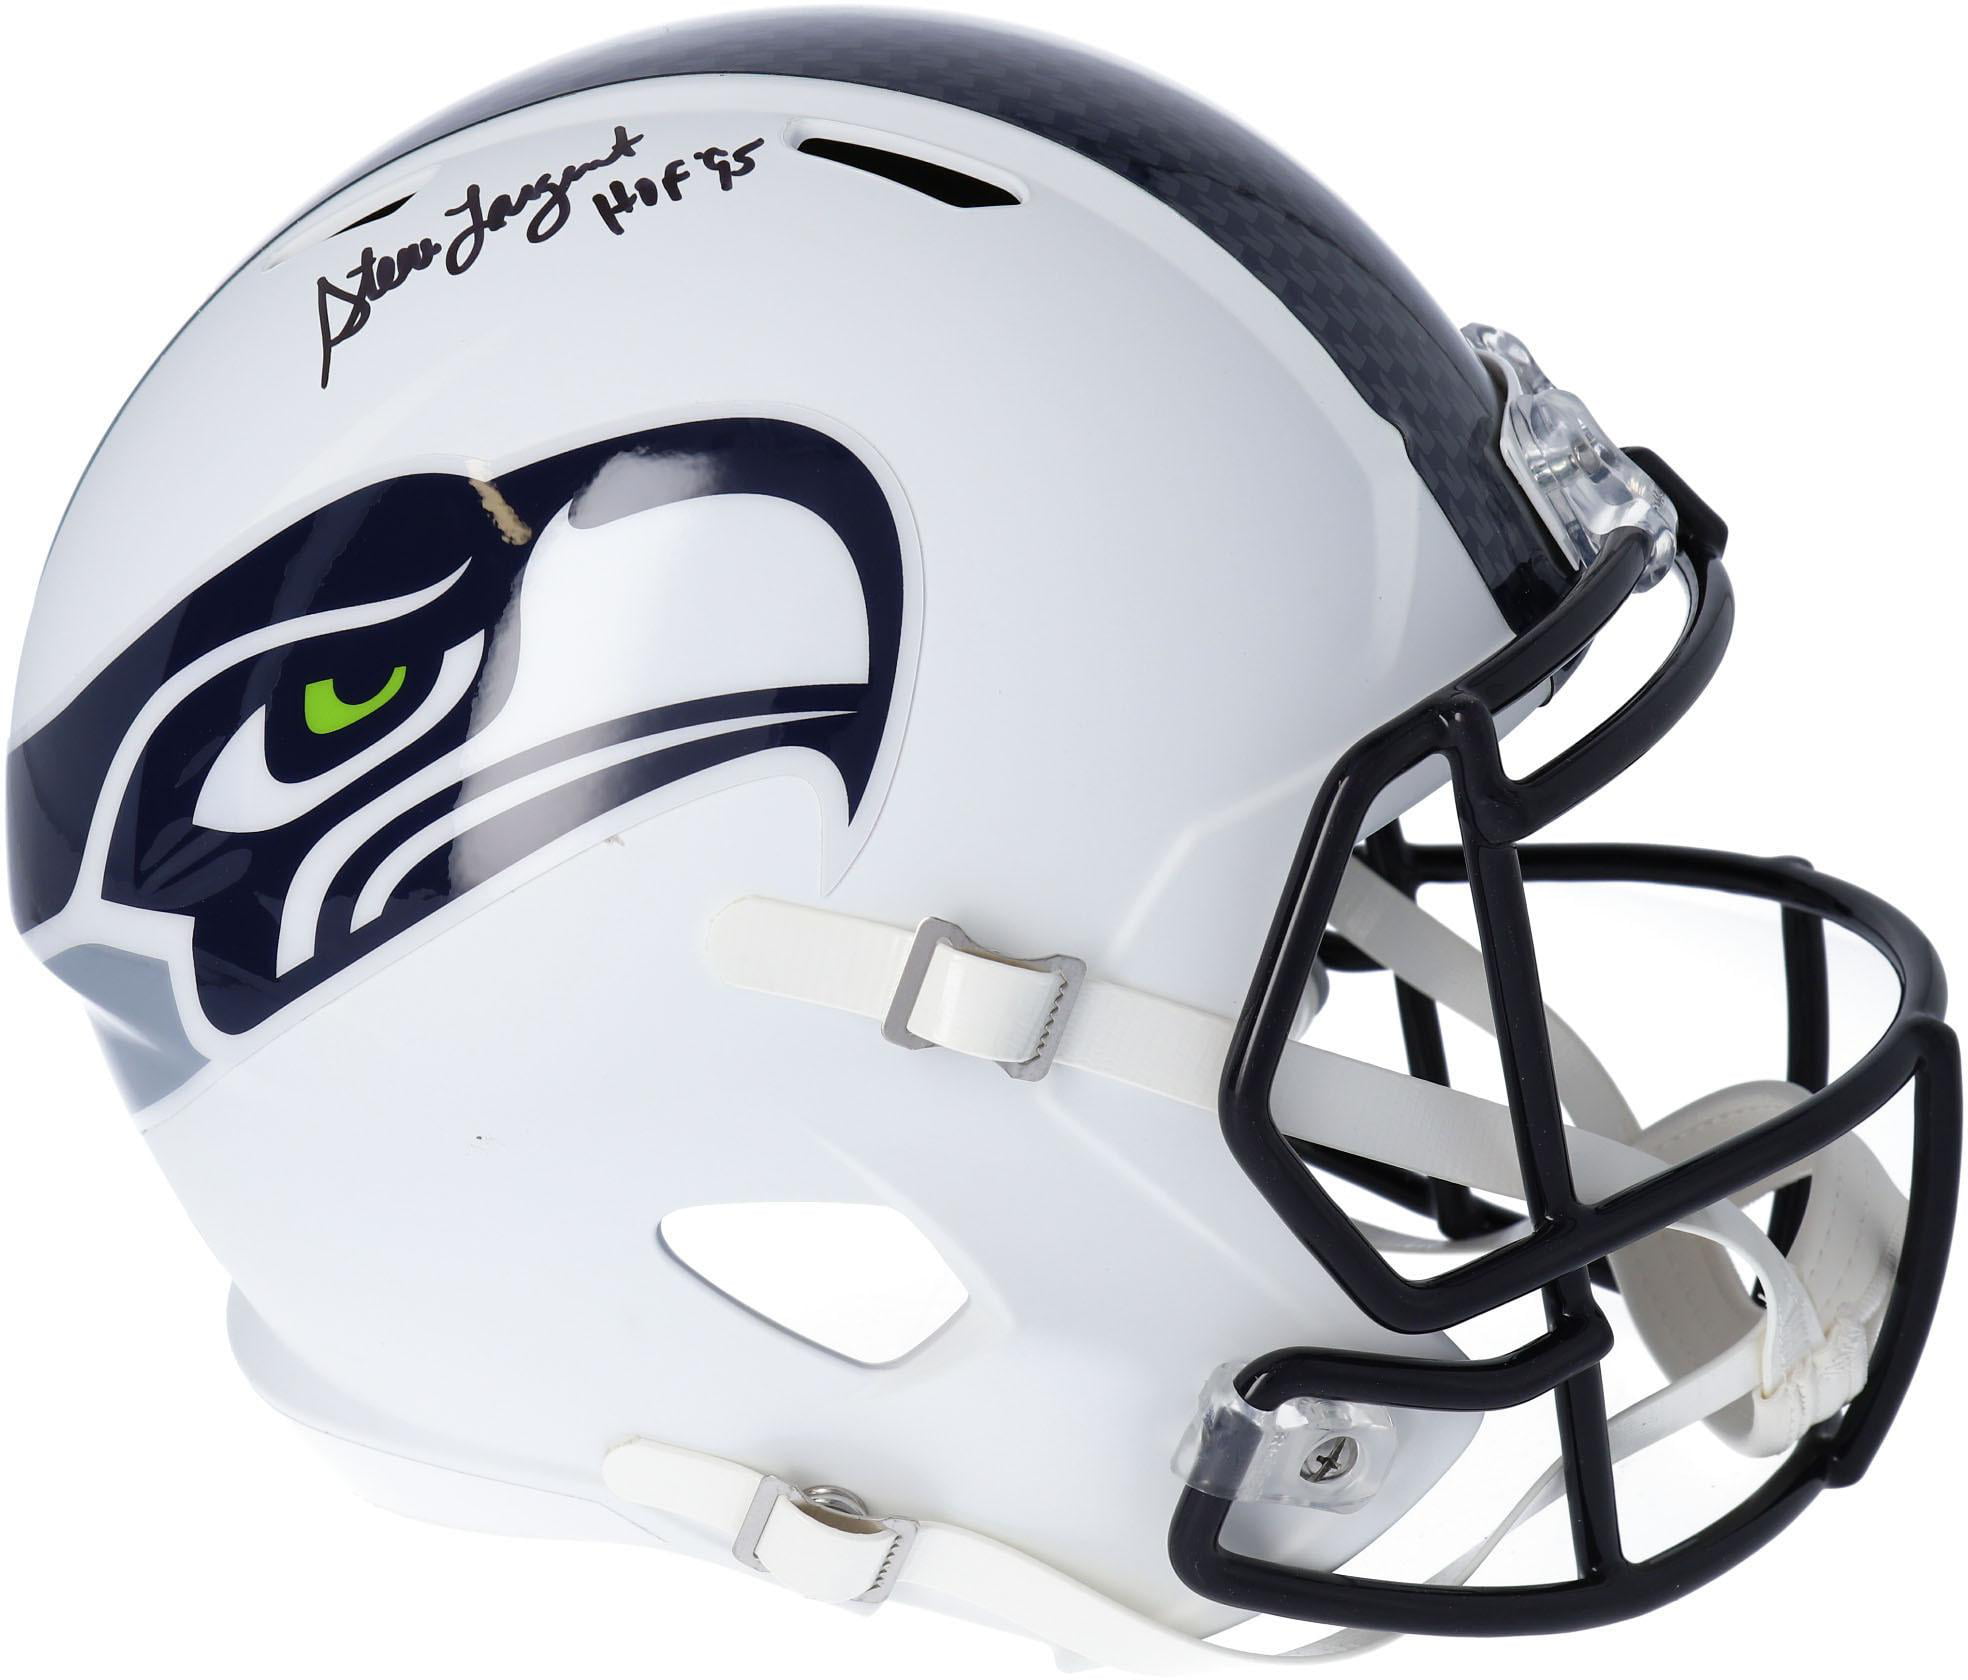 Fanatics Authentic Certified Steve Largent Seattle Seahawks Autographed Replica Helmet withHOF 95 Inscription